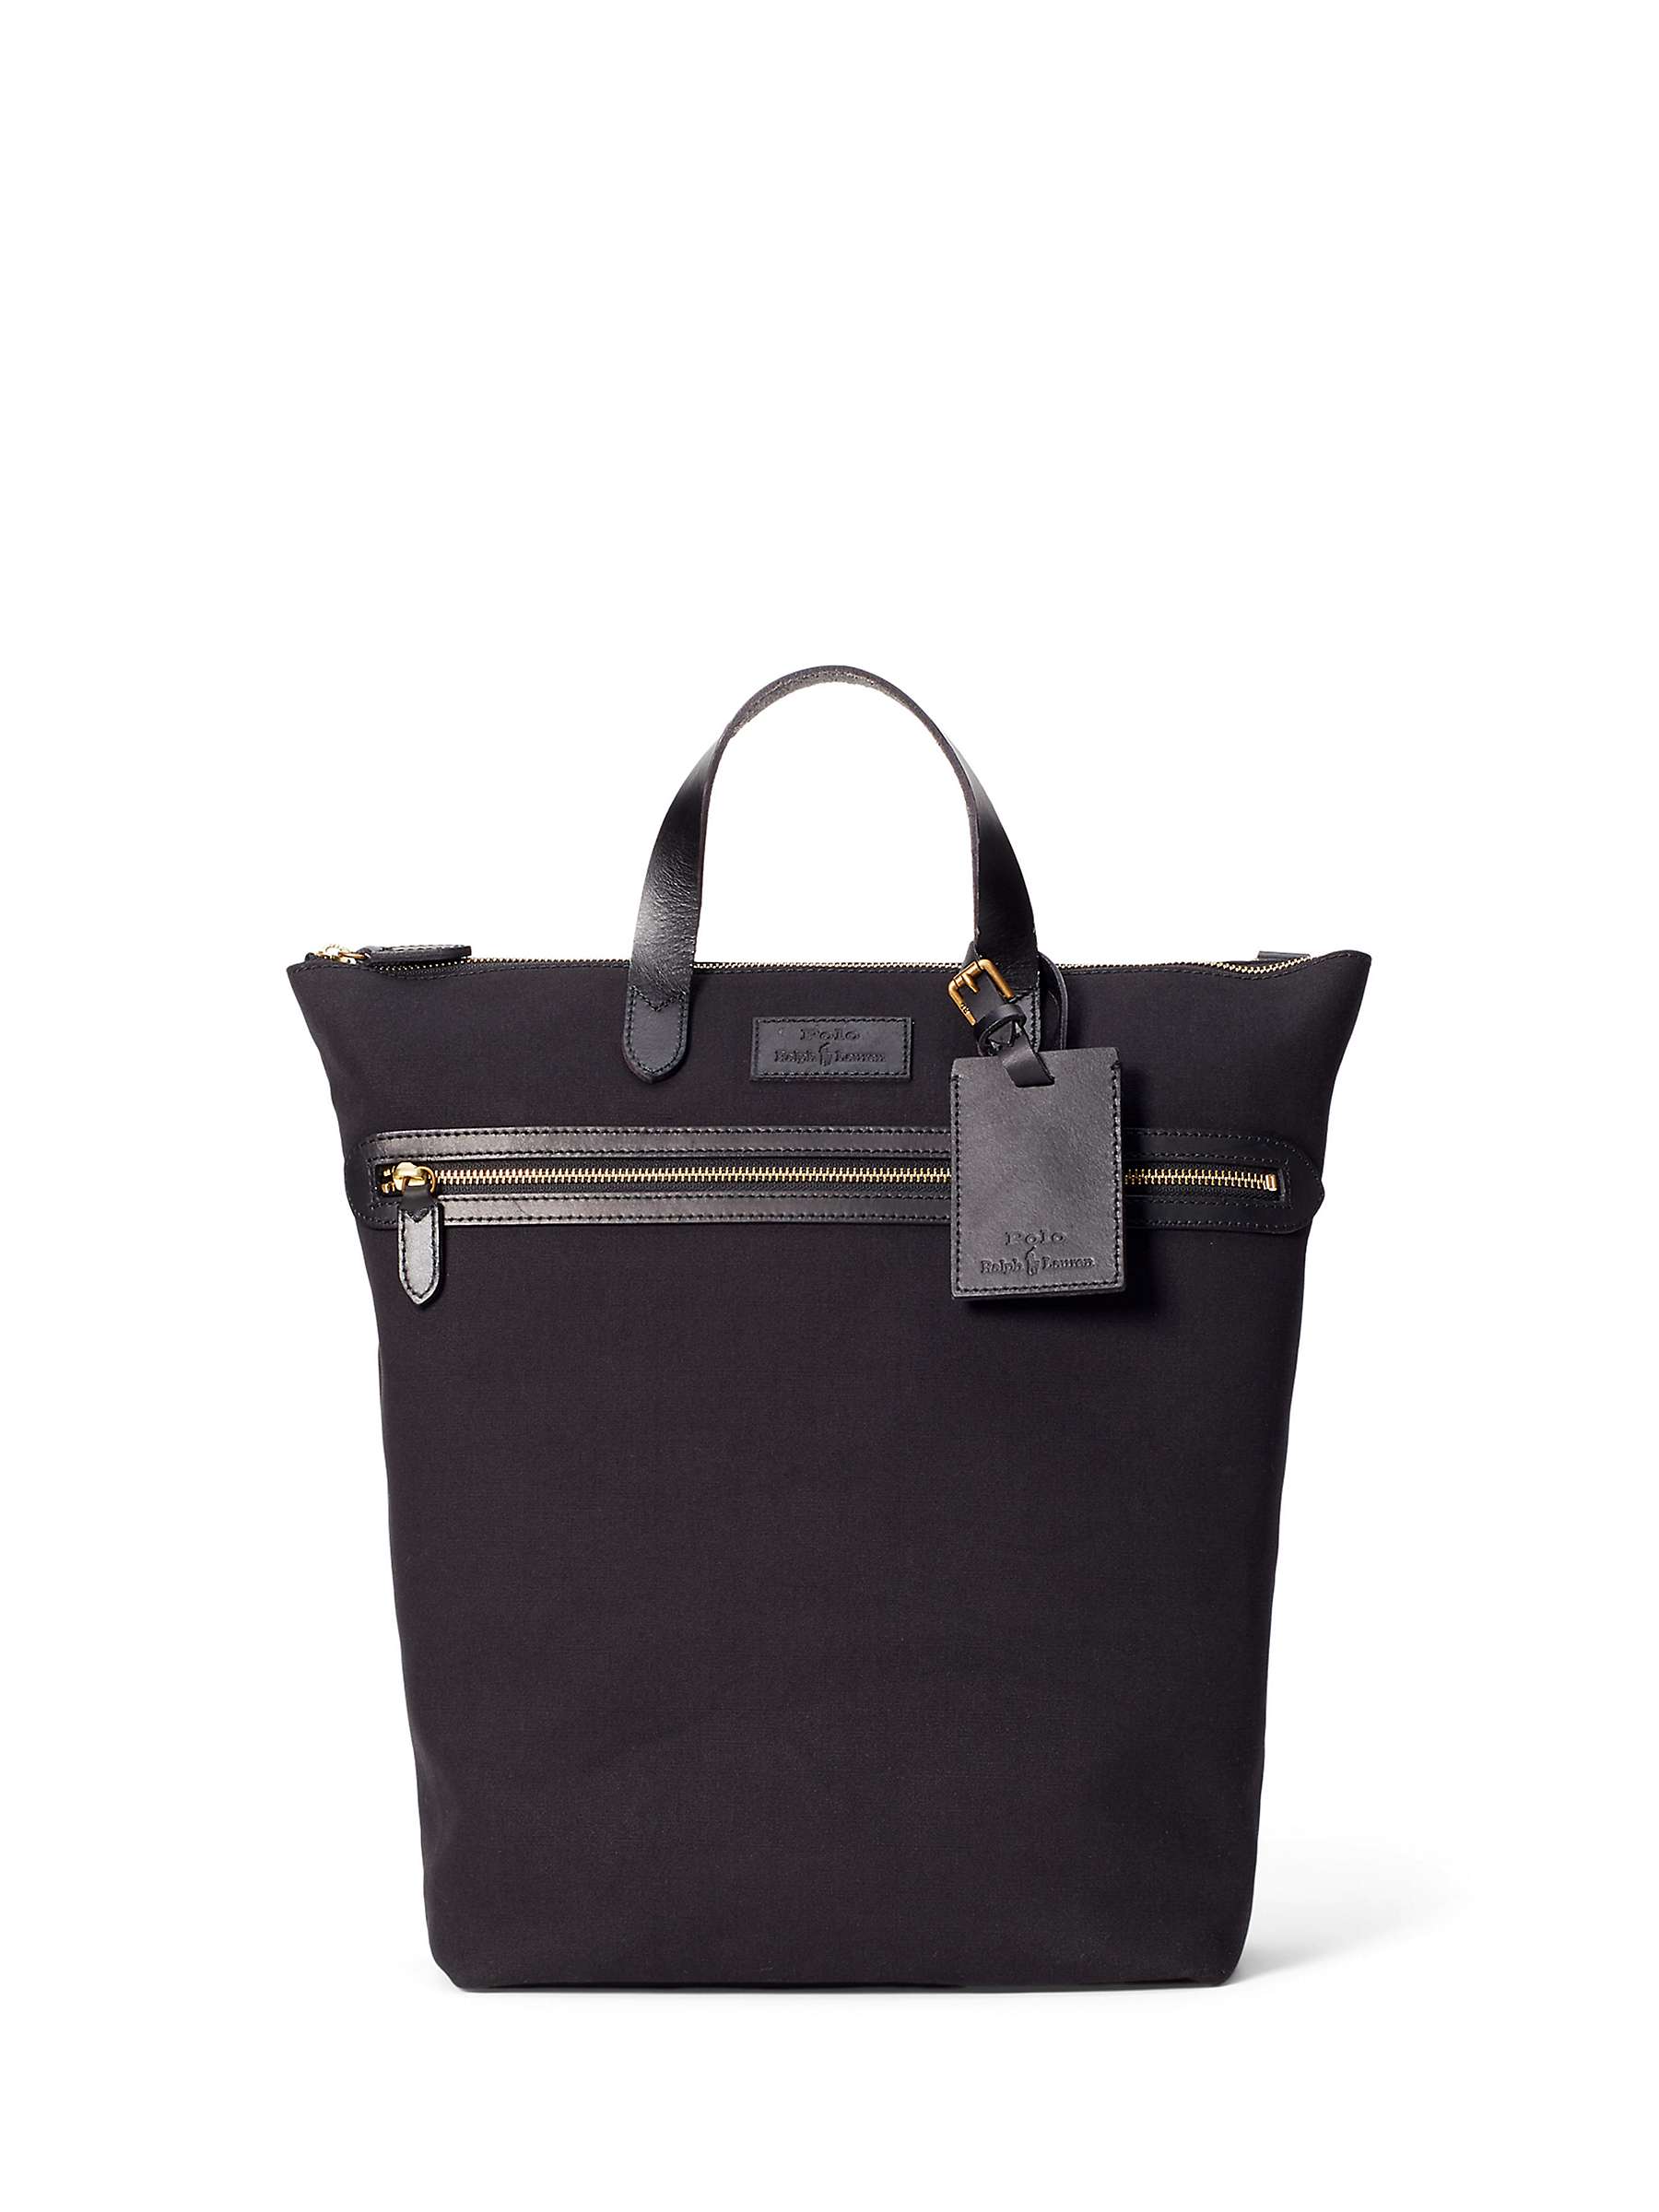 Buy Polo Ralph Lauren Medium Work Tote Bag Online at johnlewis.com